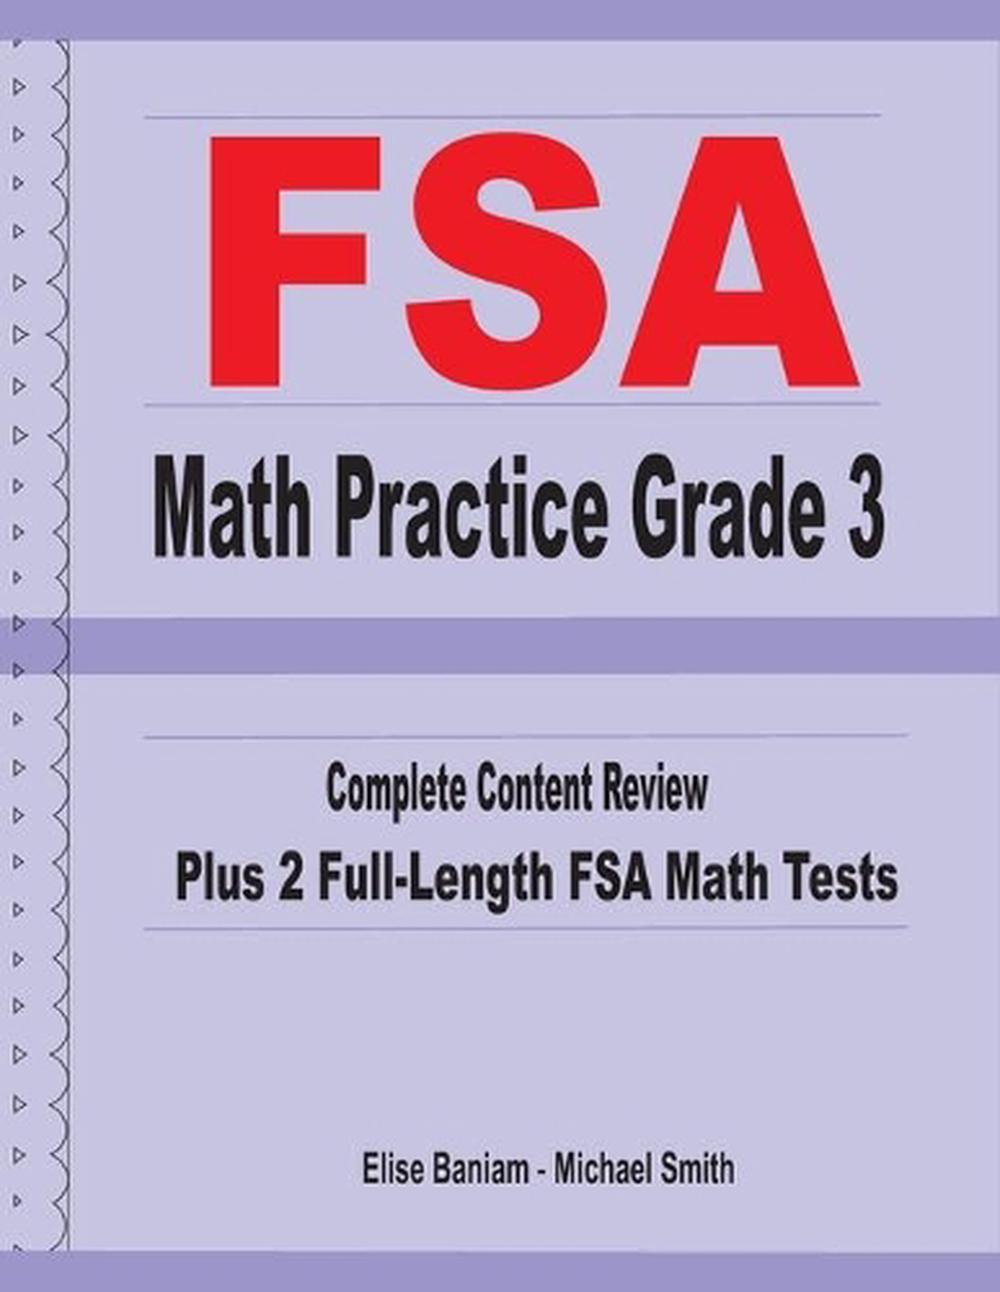 fsa-math-practice-grade-3-complete-content-review-plus-2-full-length-fsa-math-t-ebay